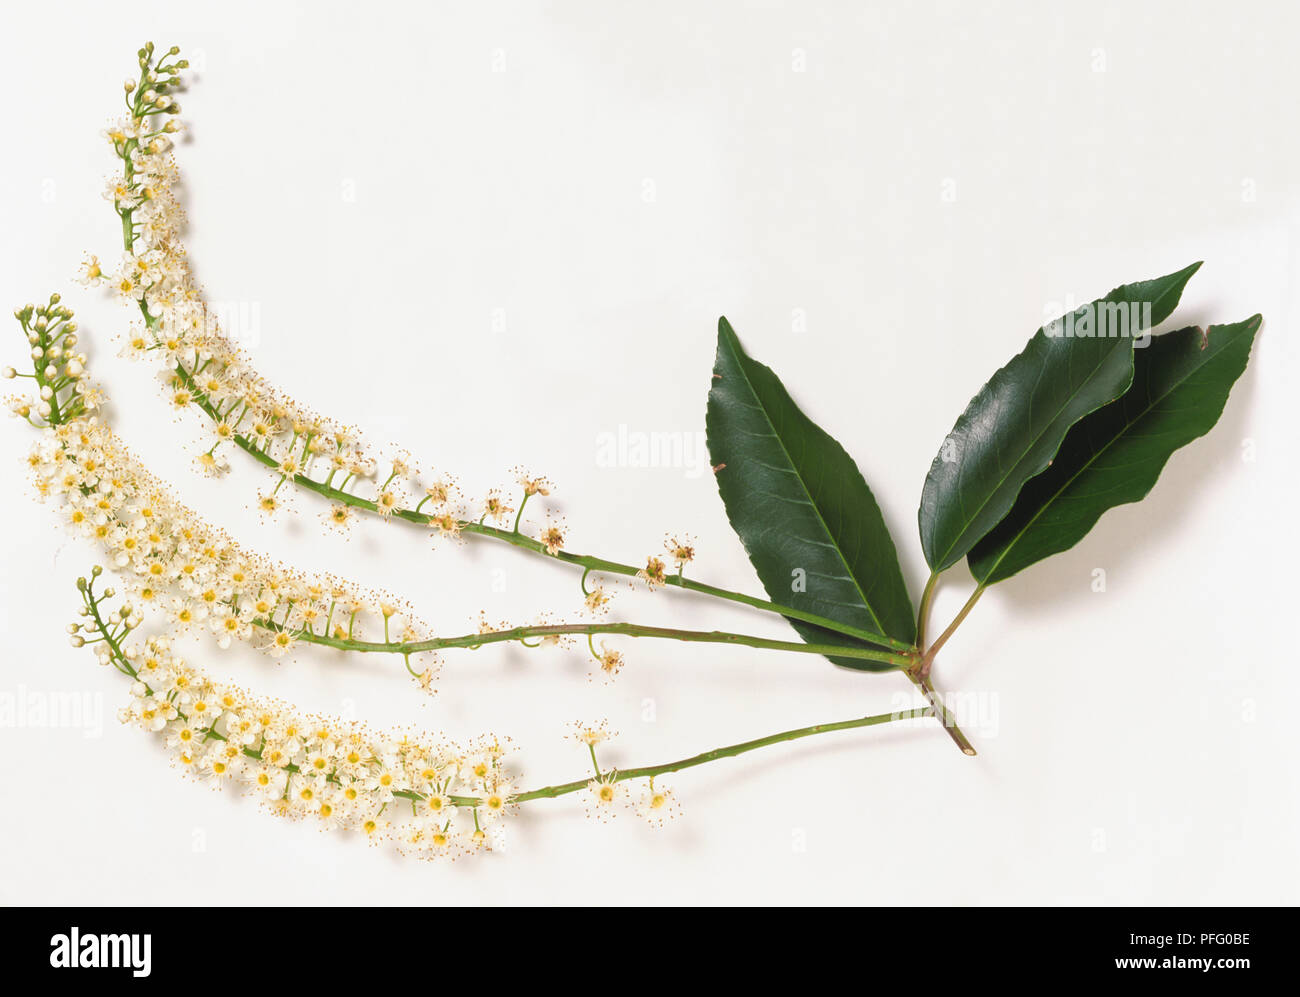 Rosaceae, Prunus lusitanica, Portugal laurel, dark stem with dark, glossy leaves and three long, slender racemes of white flowers. Stock Photo